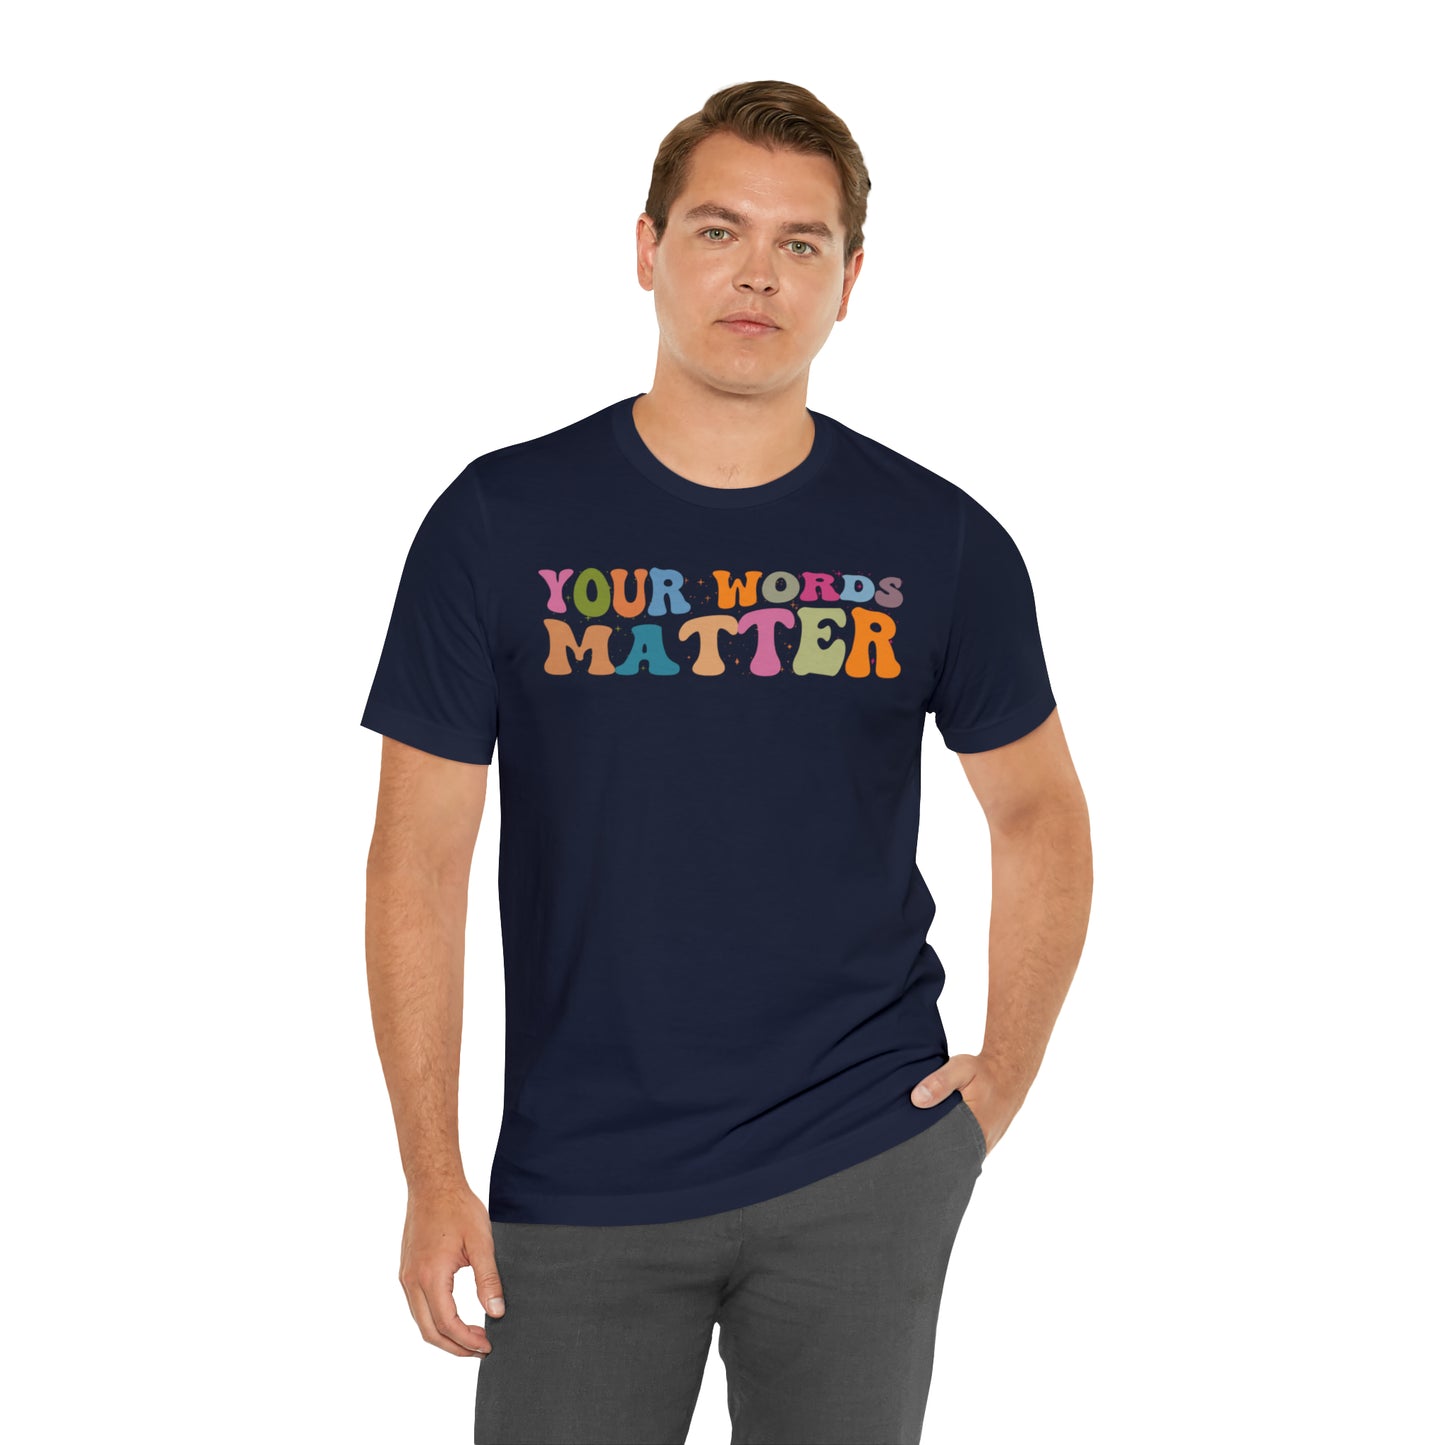 Your Words Matter Shirt, Language Special Education, AAC SPED Teacher Inclusion Tshirt, Neurodiversity Bcba Slp OT Teachers Gift, T564